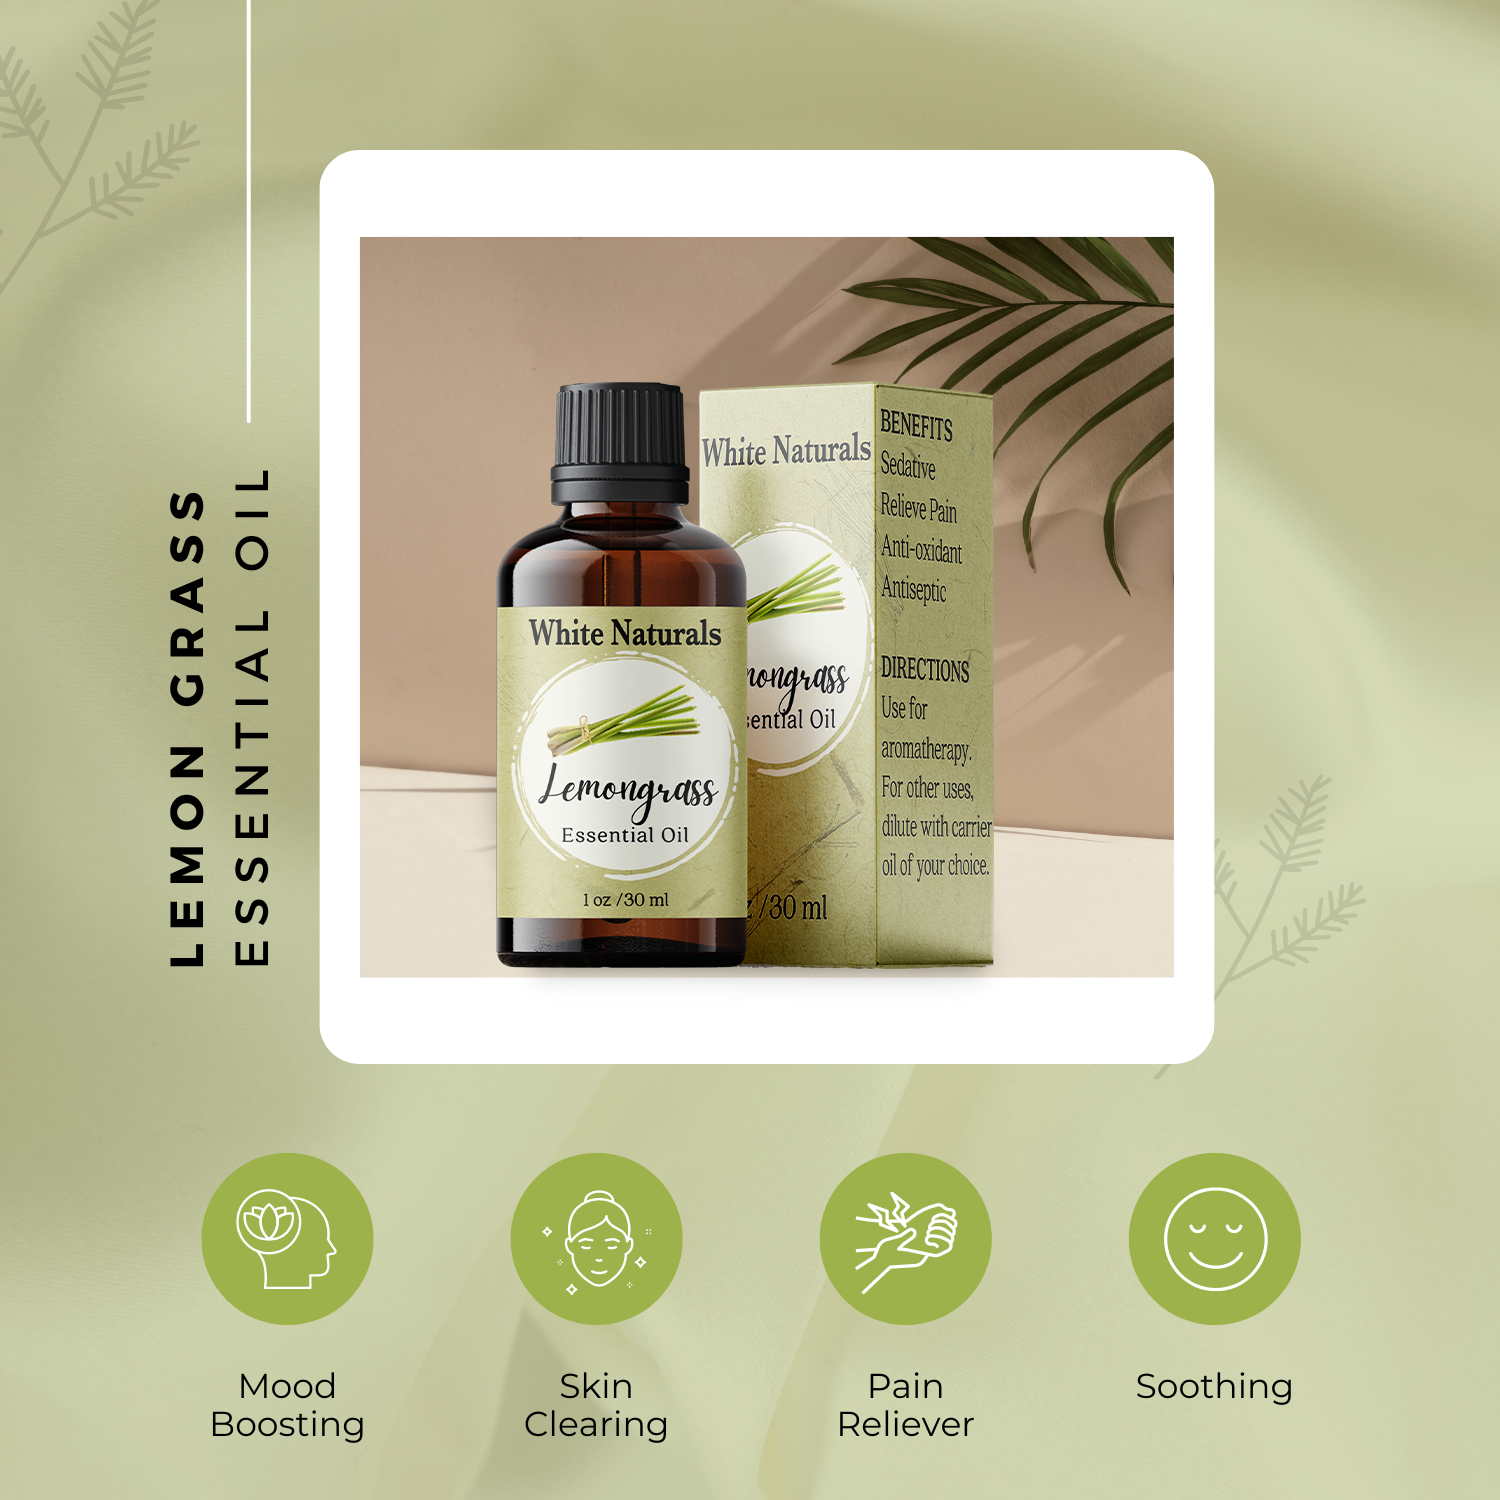 Lemongrass Essential Oil - Nourish